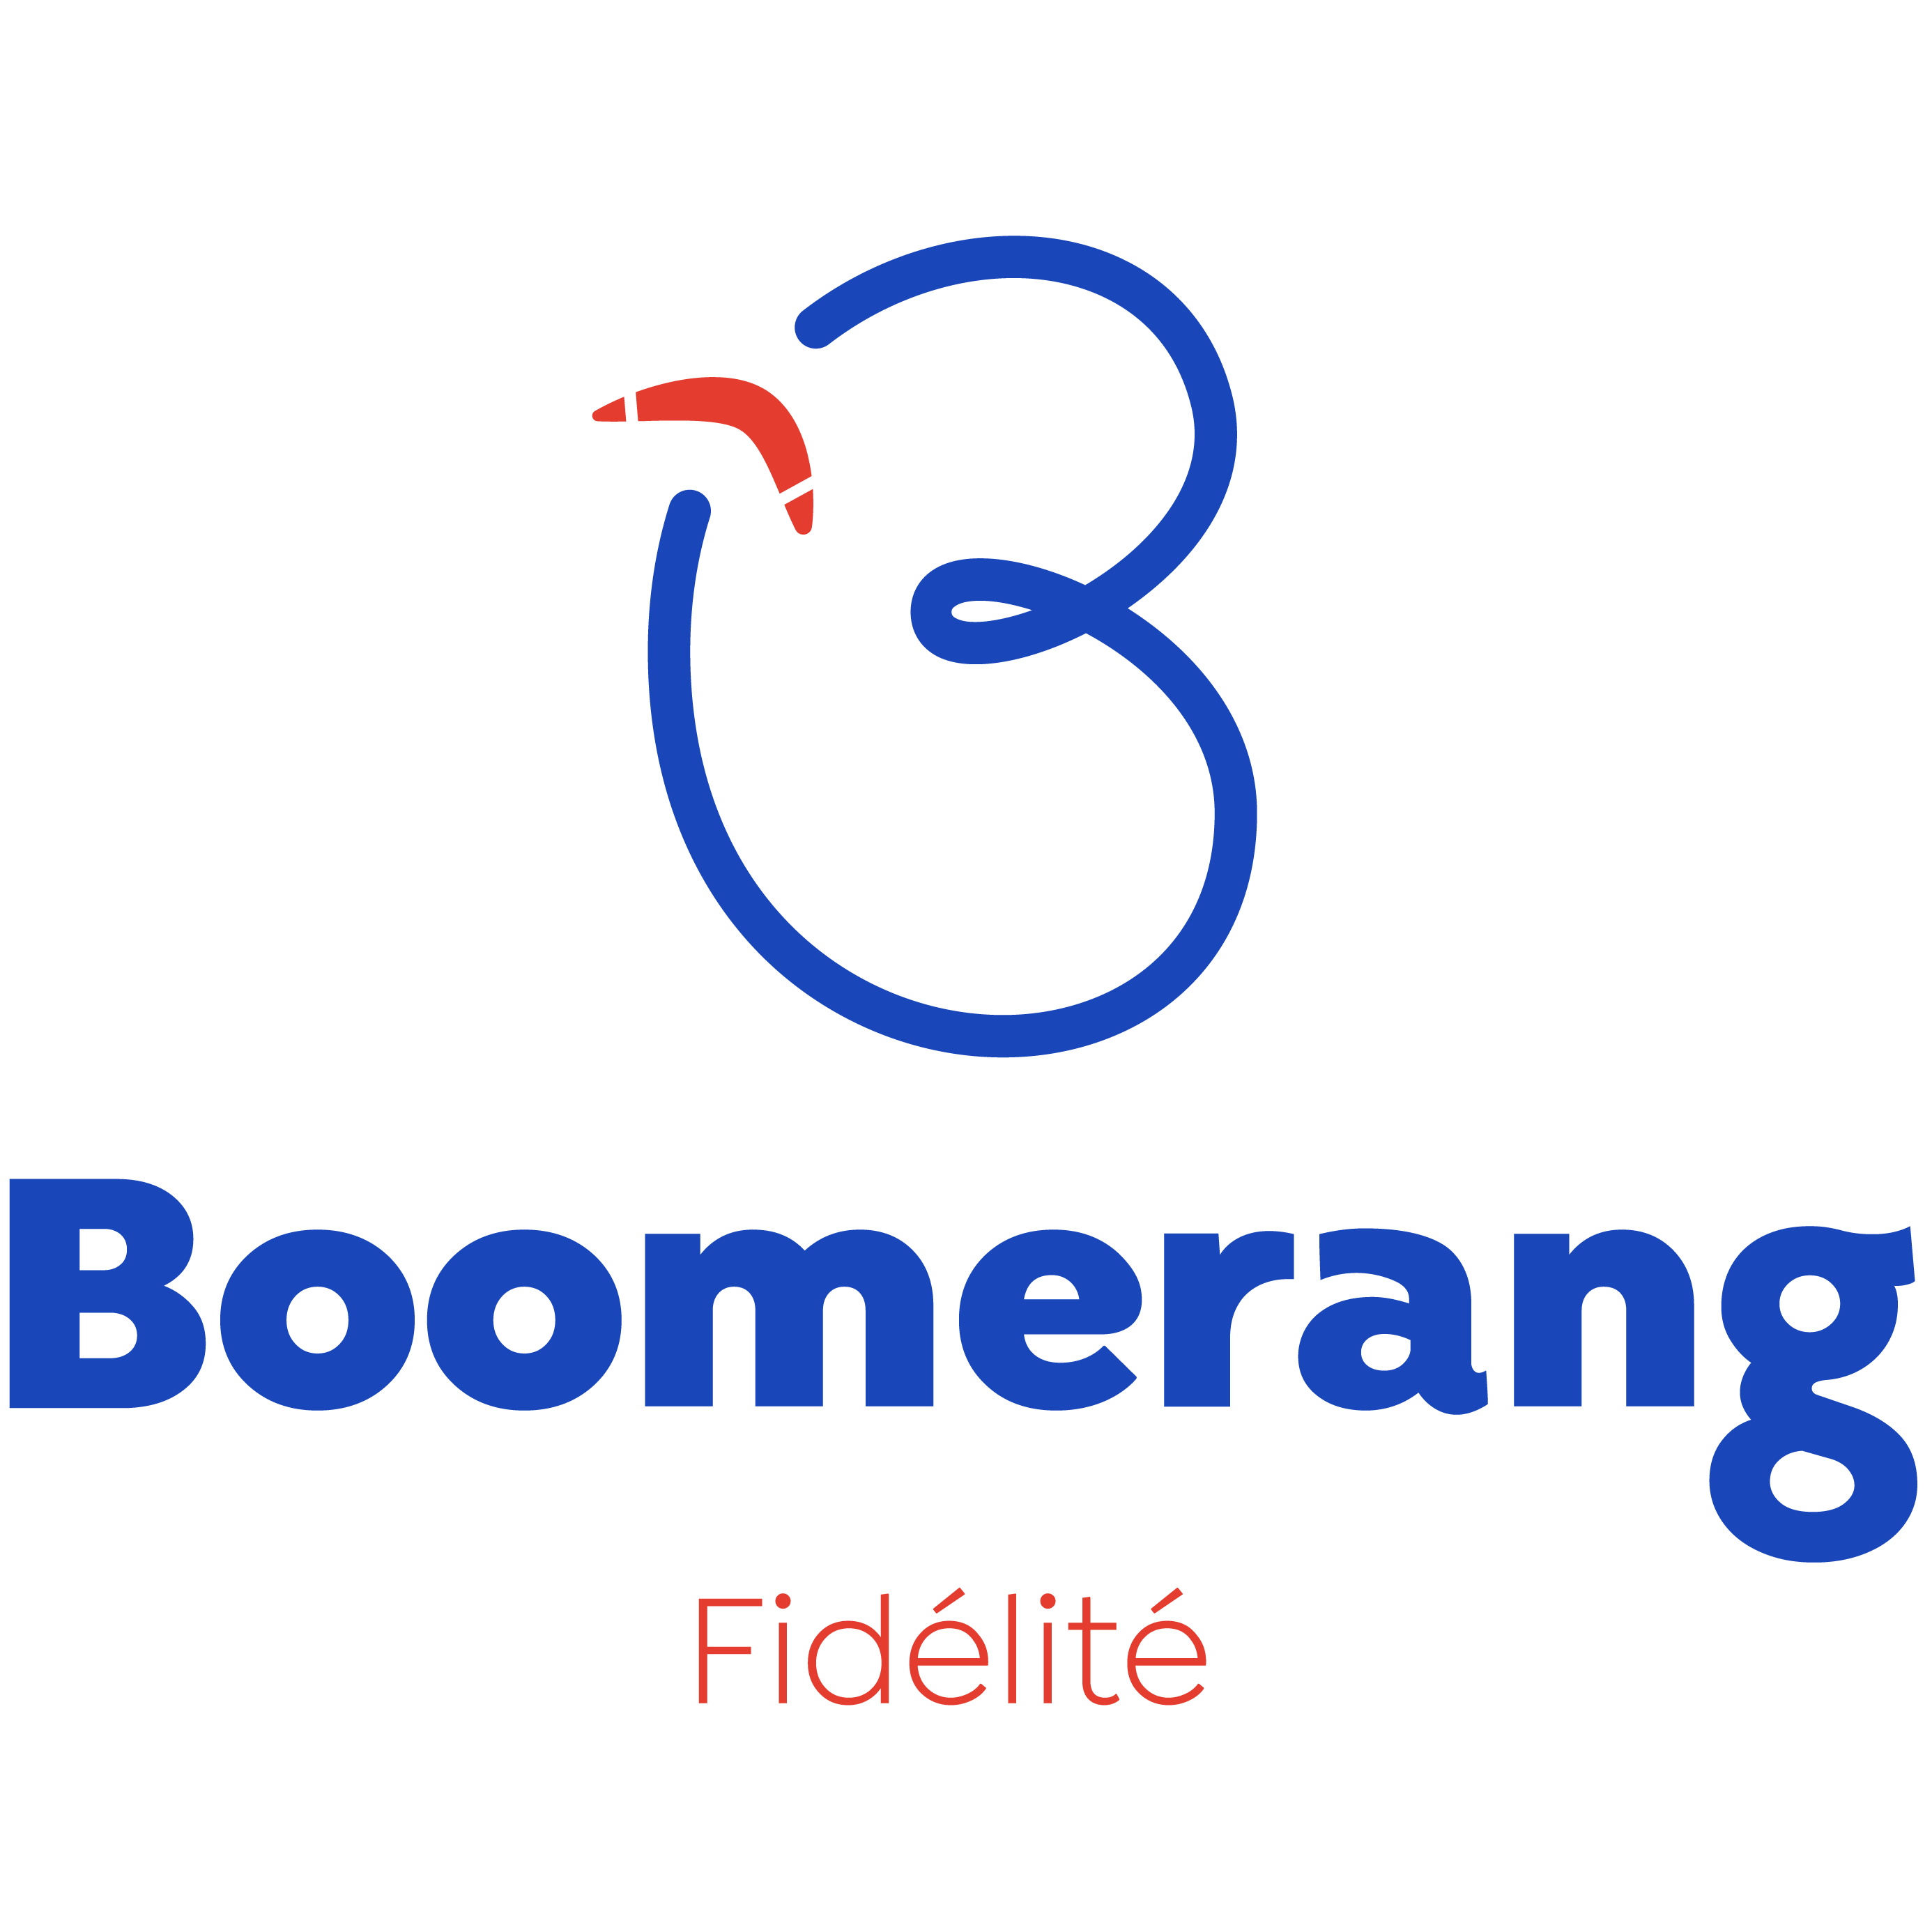 Boomerang fidelite